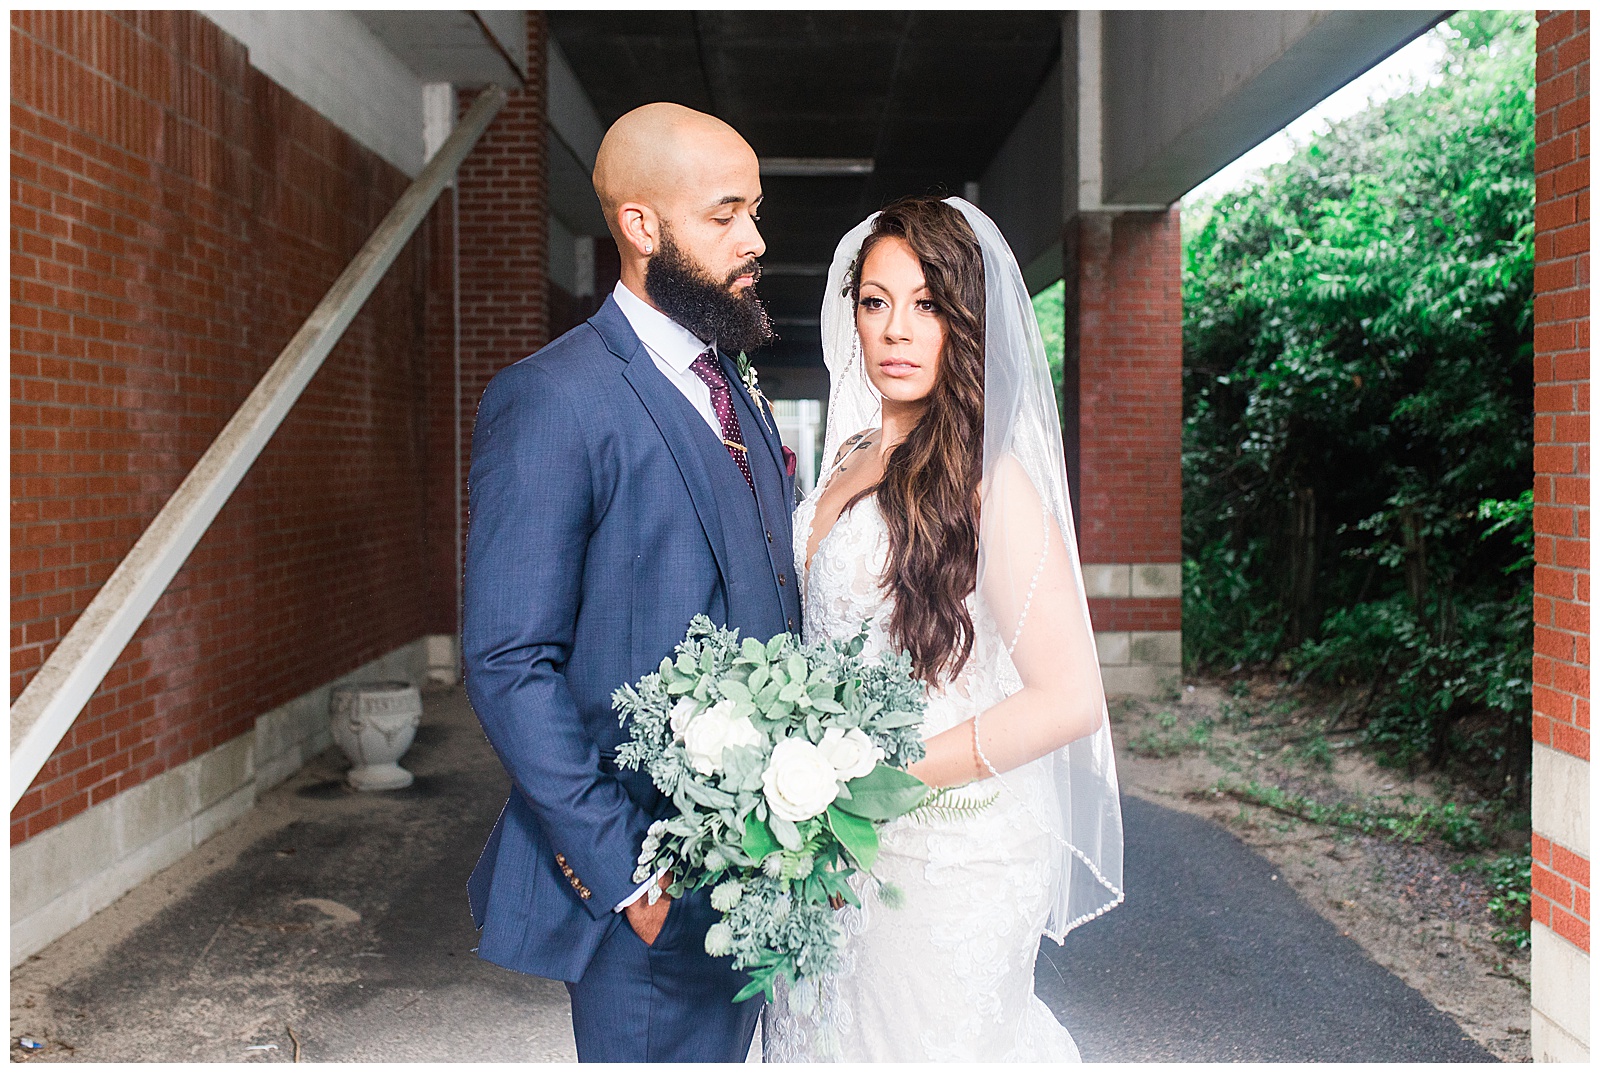 Aric & Lissette Wedding by Vinluan Photography